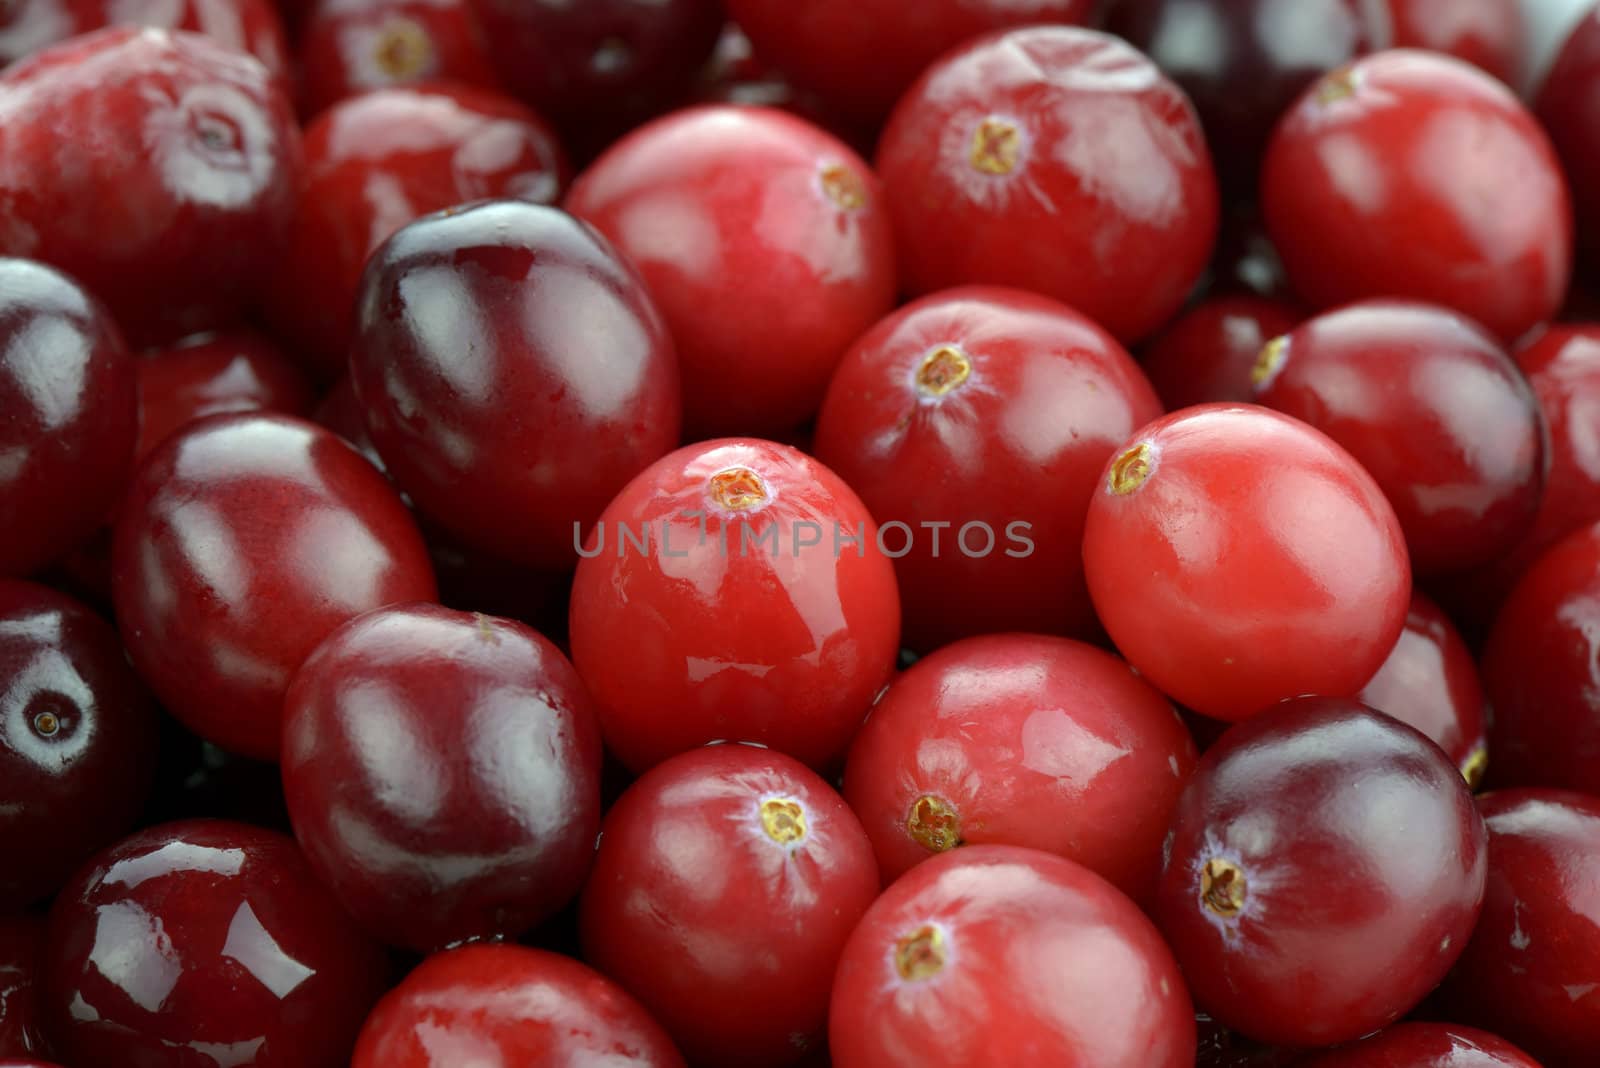 Close-up of fresh cranberries